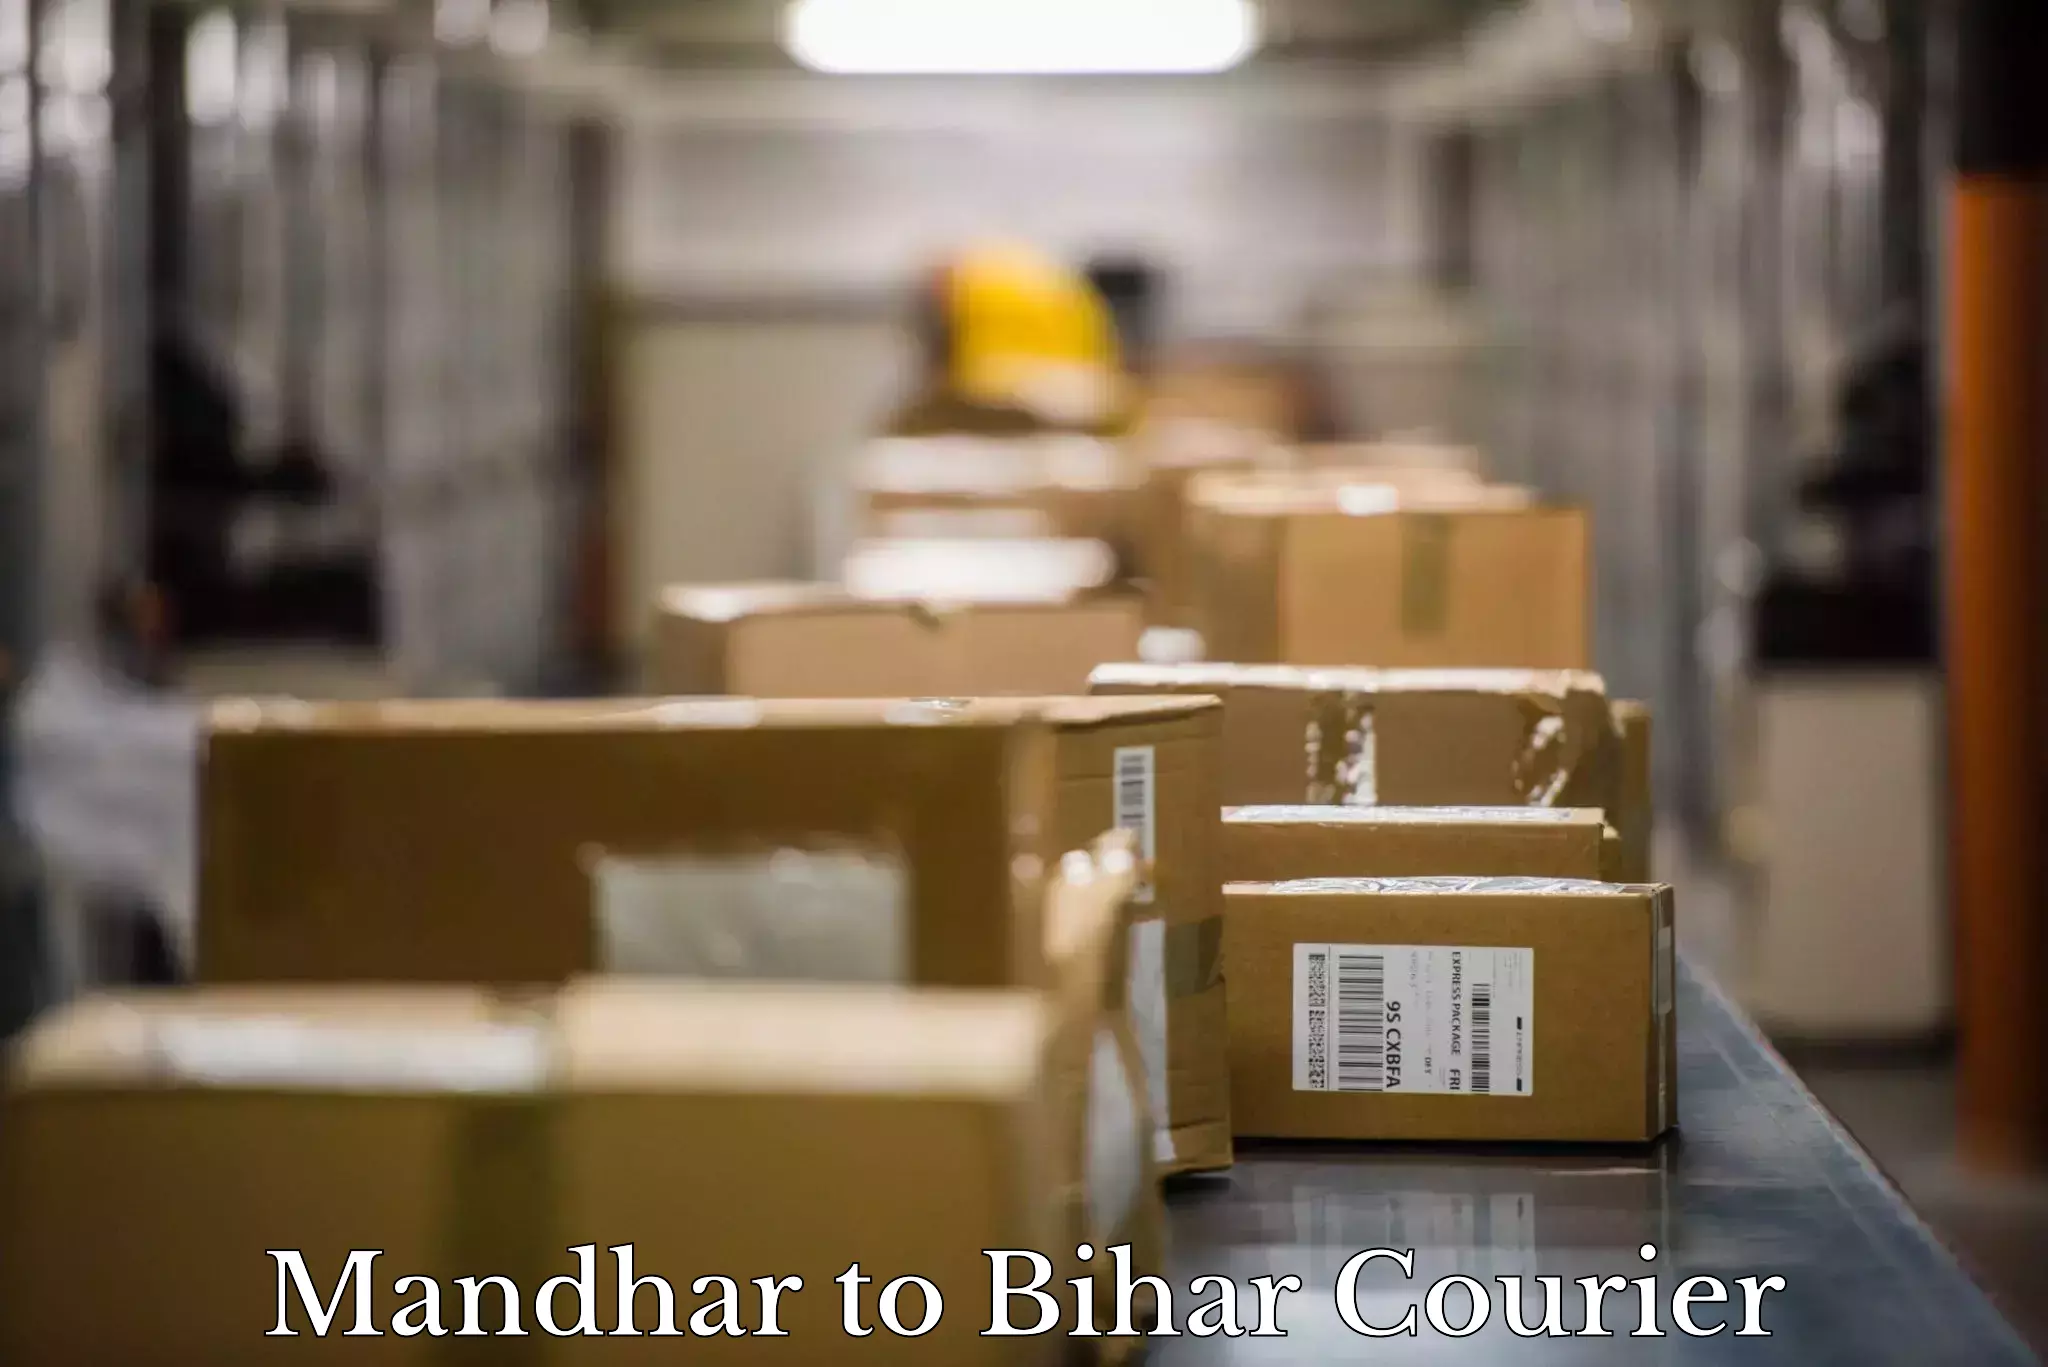 Moving and storage services Mandhar to Darbhanga